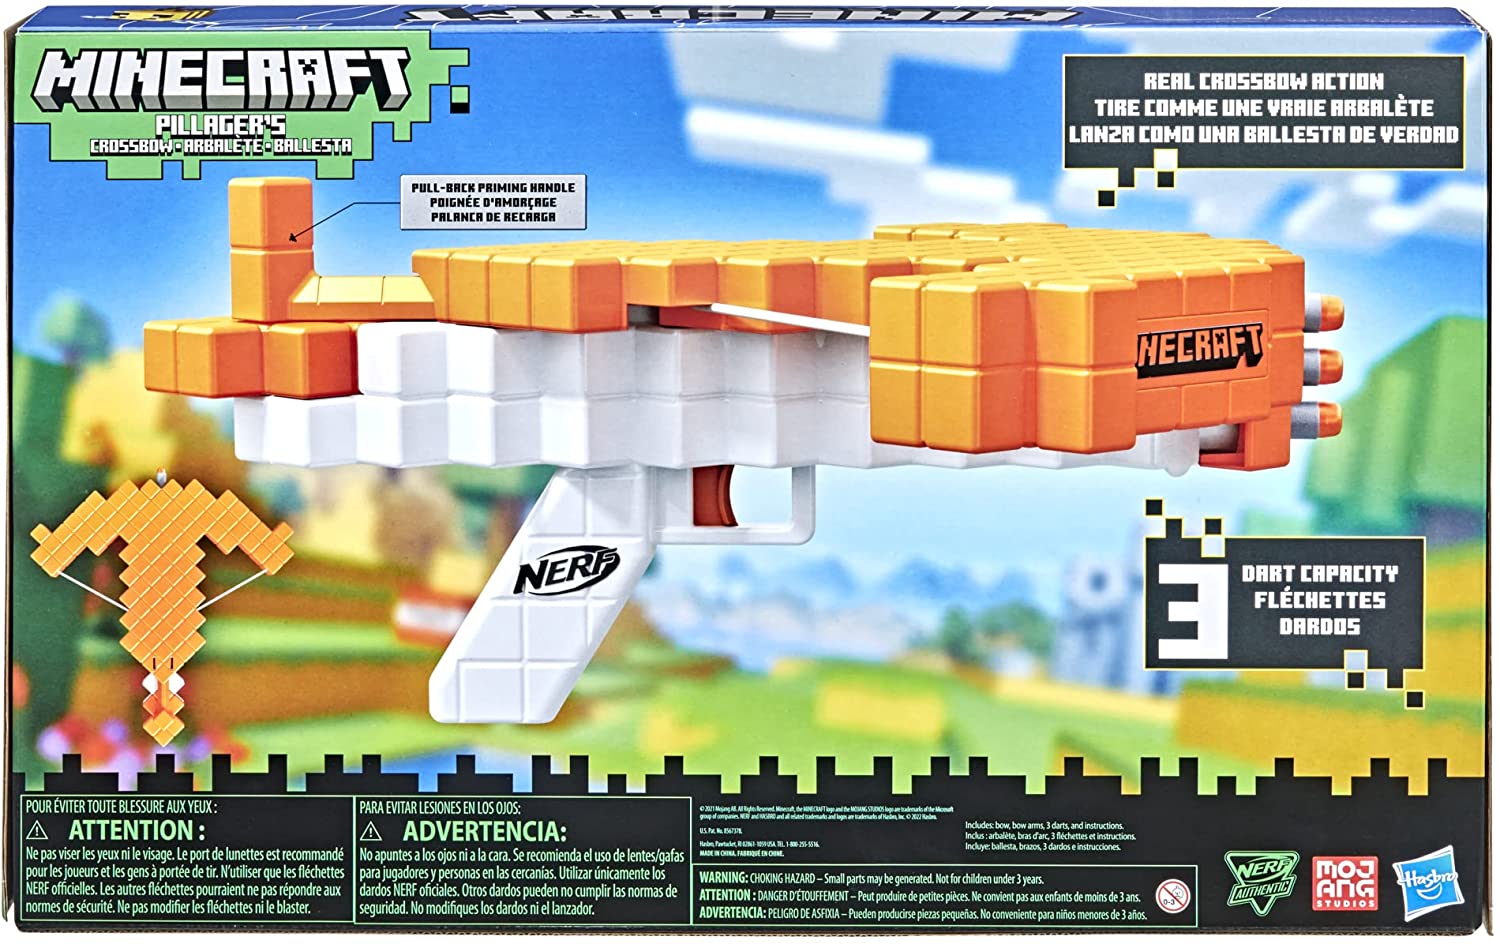 Nerf Minecraft Pillager's Crossbow Dart-Blasting Crossbow - Includes 3 Official Elite foam Darts